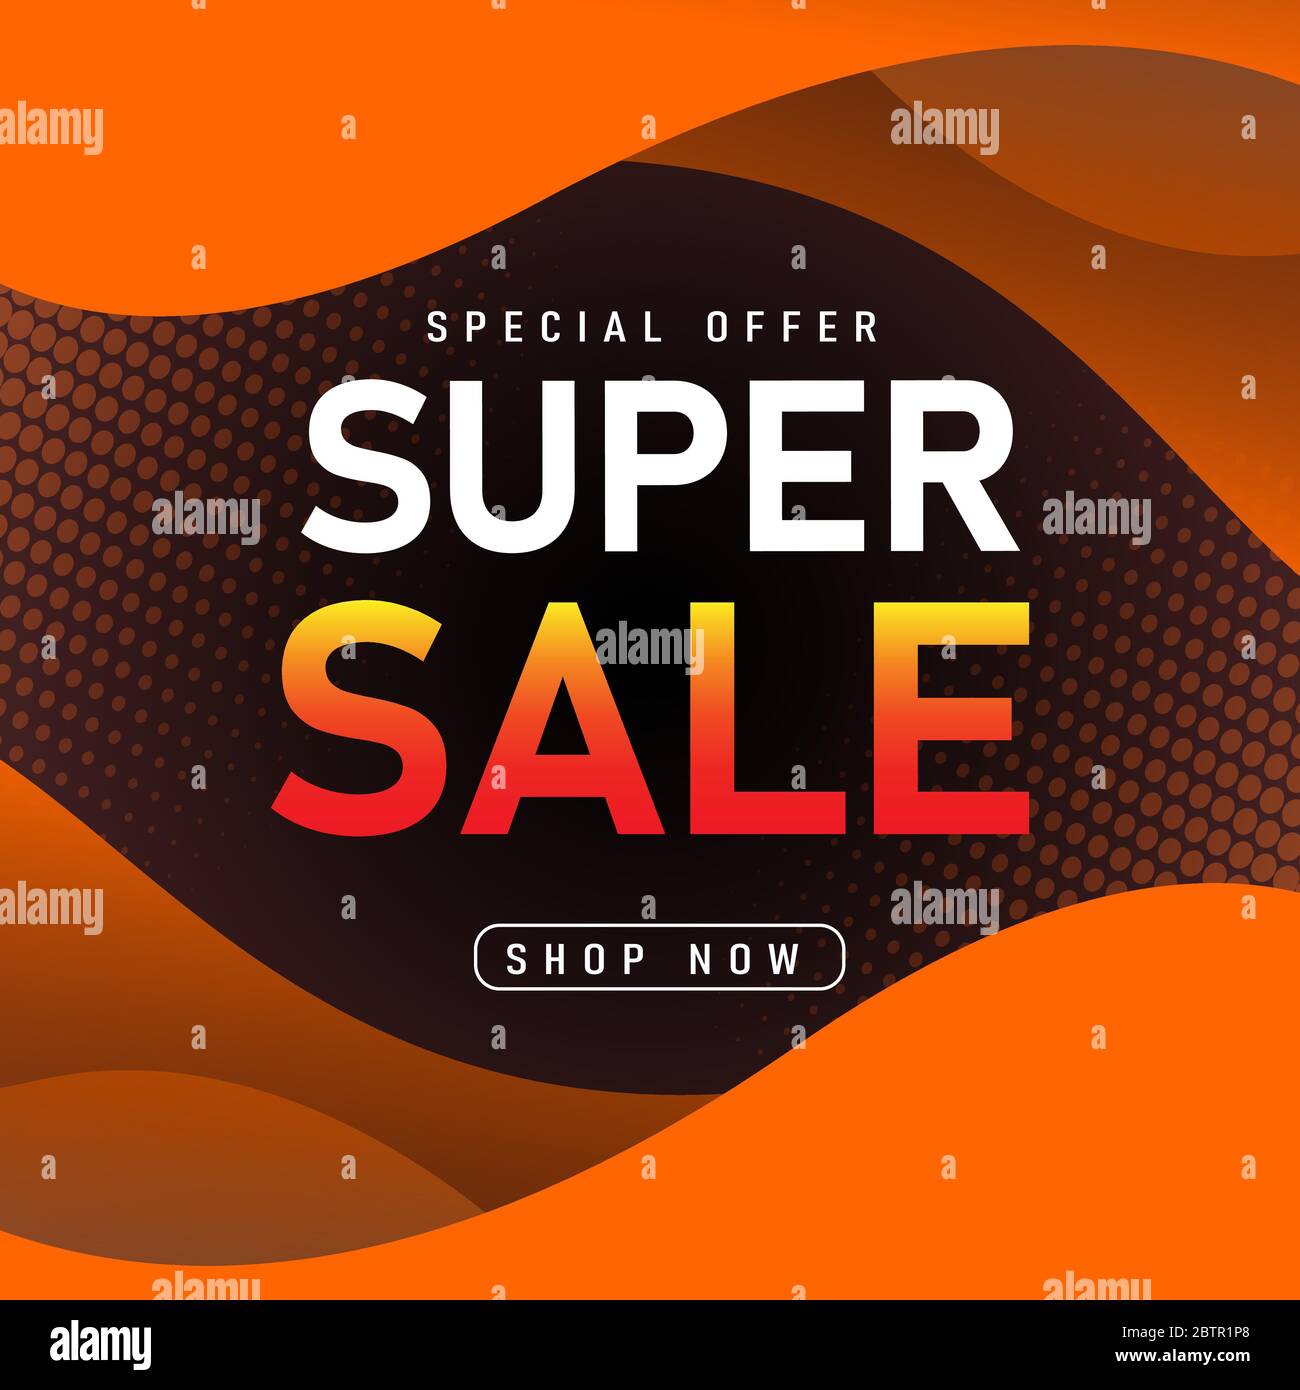 Sale banner template design, Super sale special offer. poster, placard, web banner designs, vector illustration Stock Vector